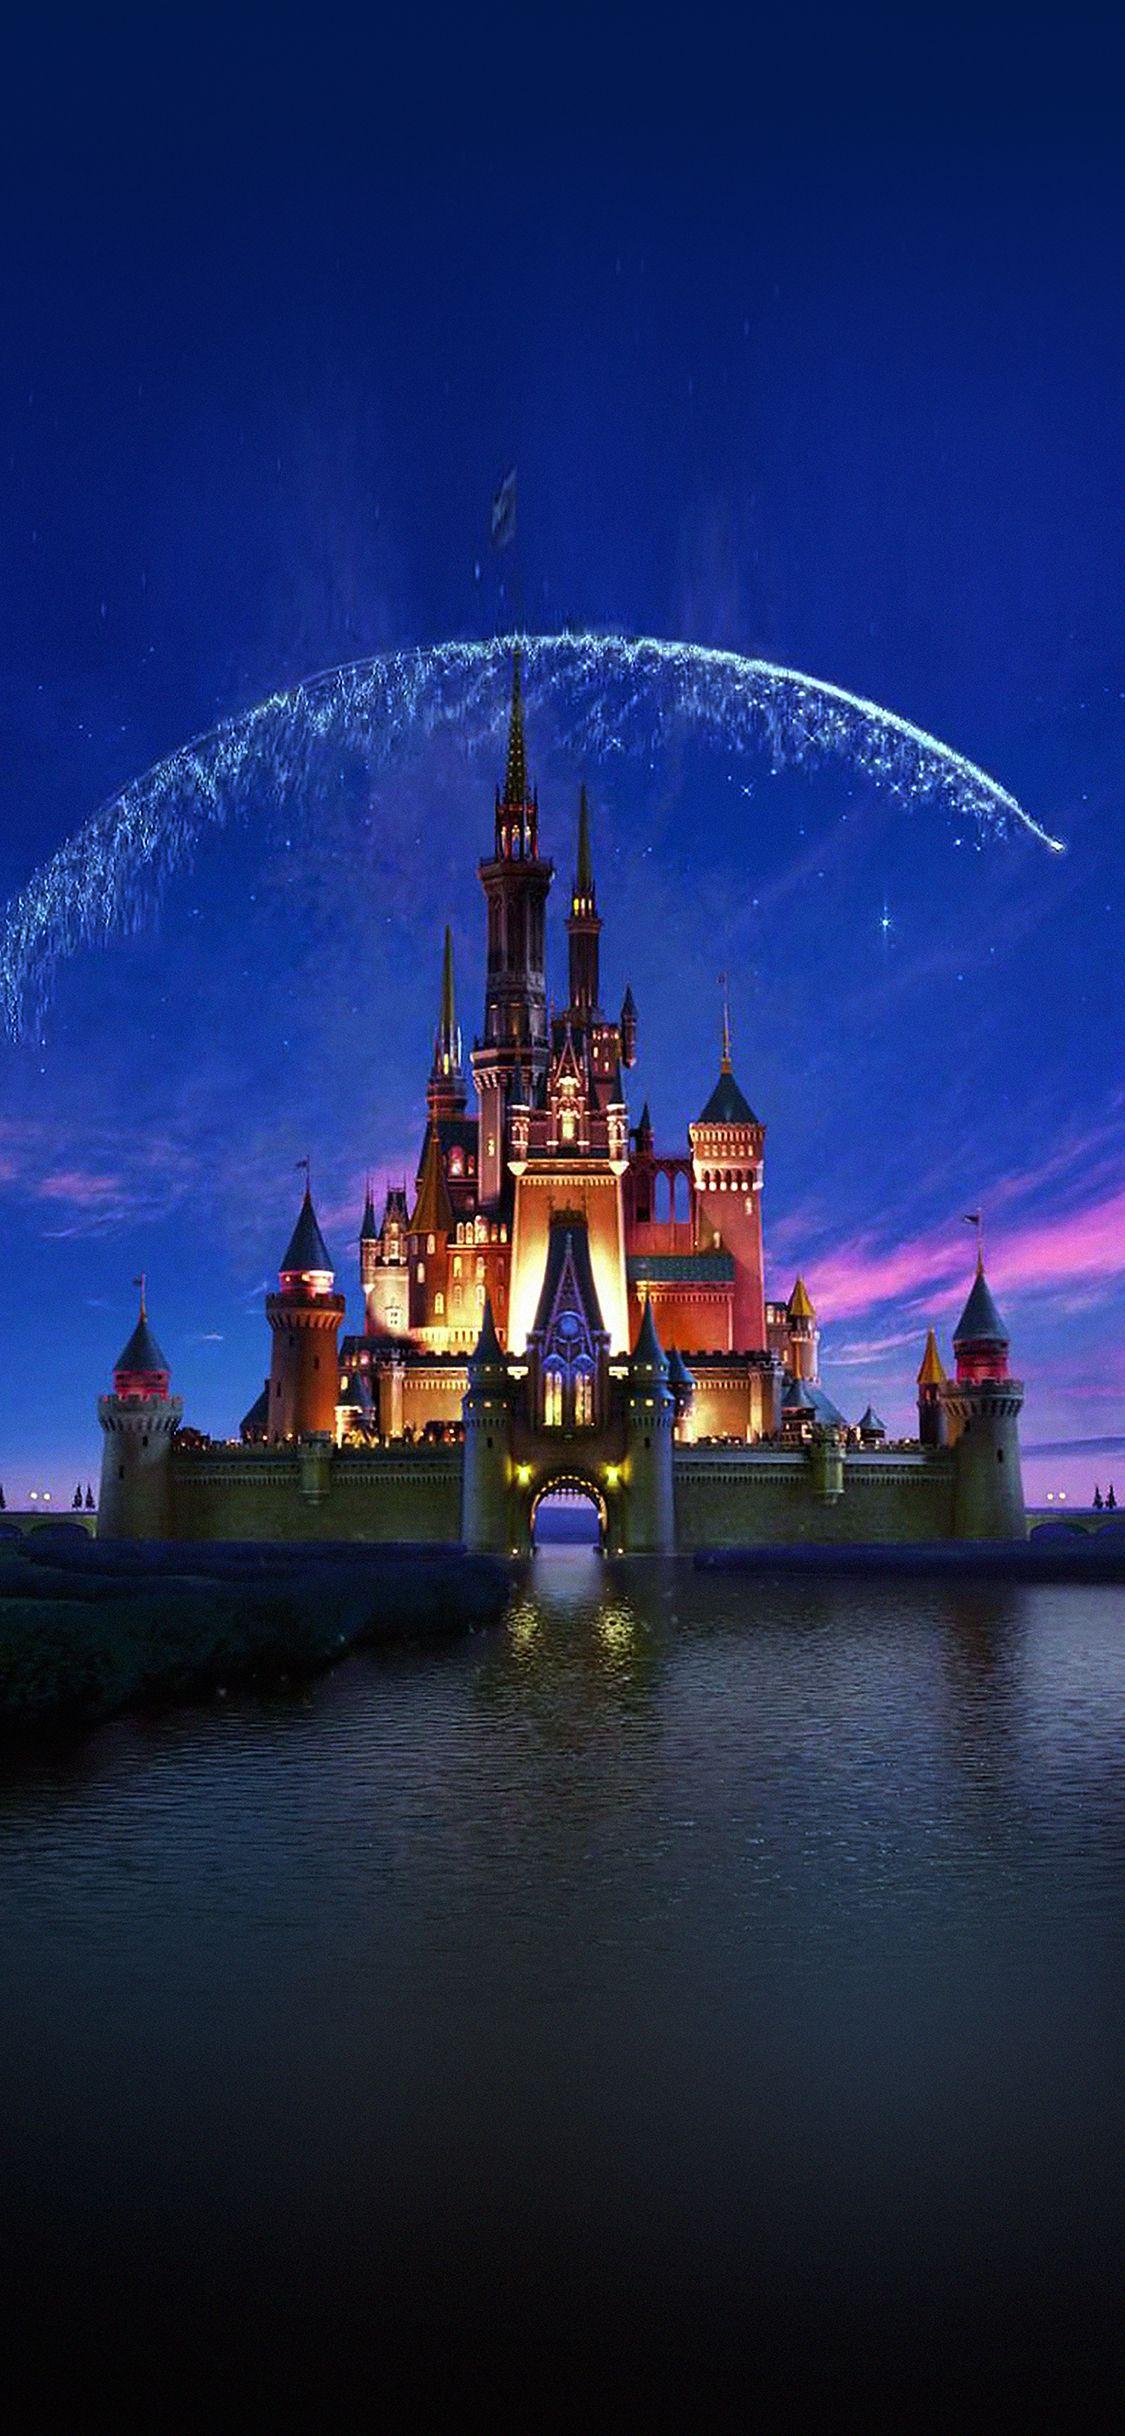 Disney Castle Iphone Wallpapers Top Free Disney Castle Iphone Backgrounds Wallpaperaccess